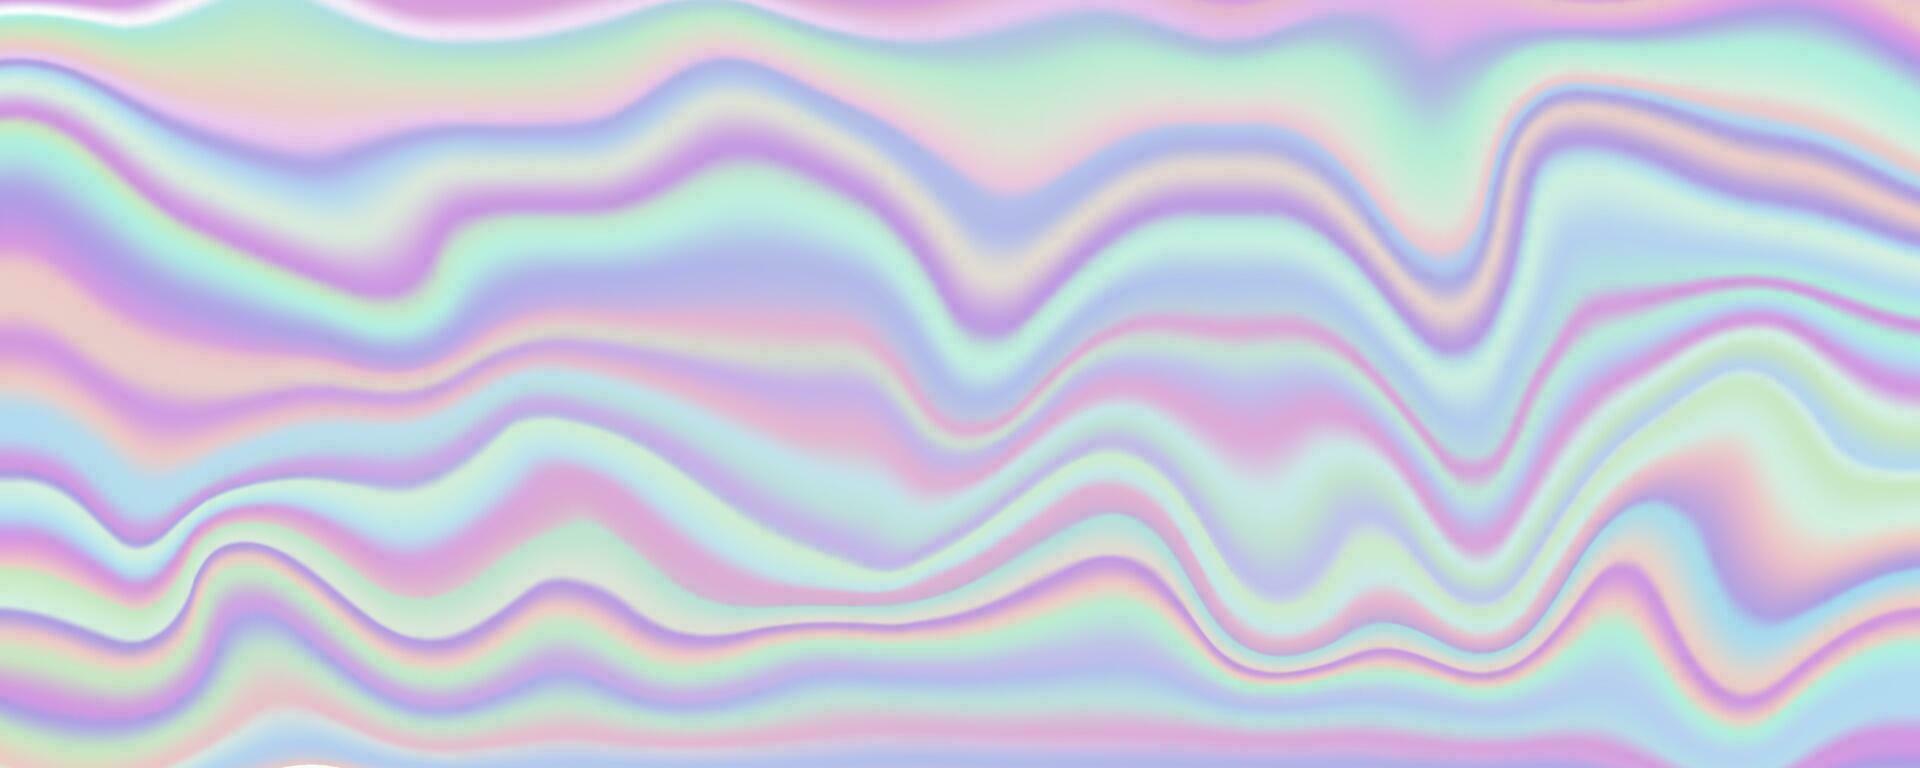 Hologram texture background. Iridescent striped gradient. Neon rainbow pastel foil. Unicorn pearl wallpaper. Vector